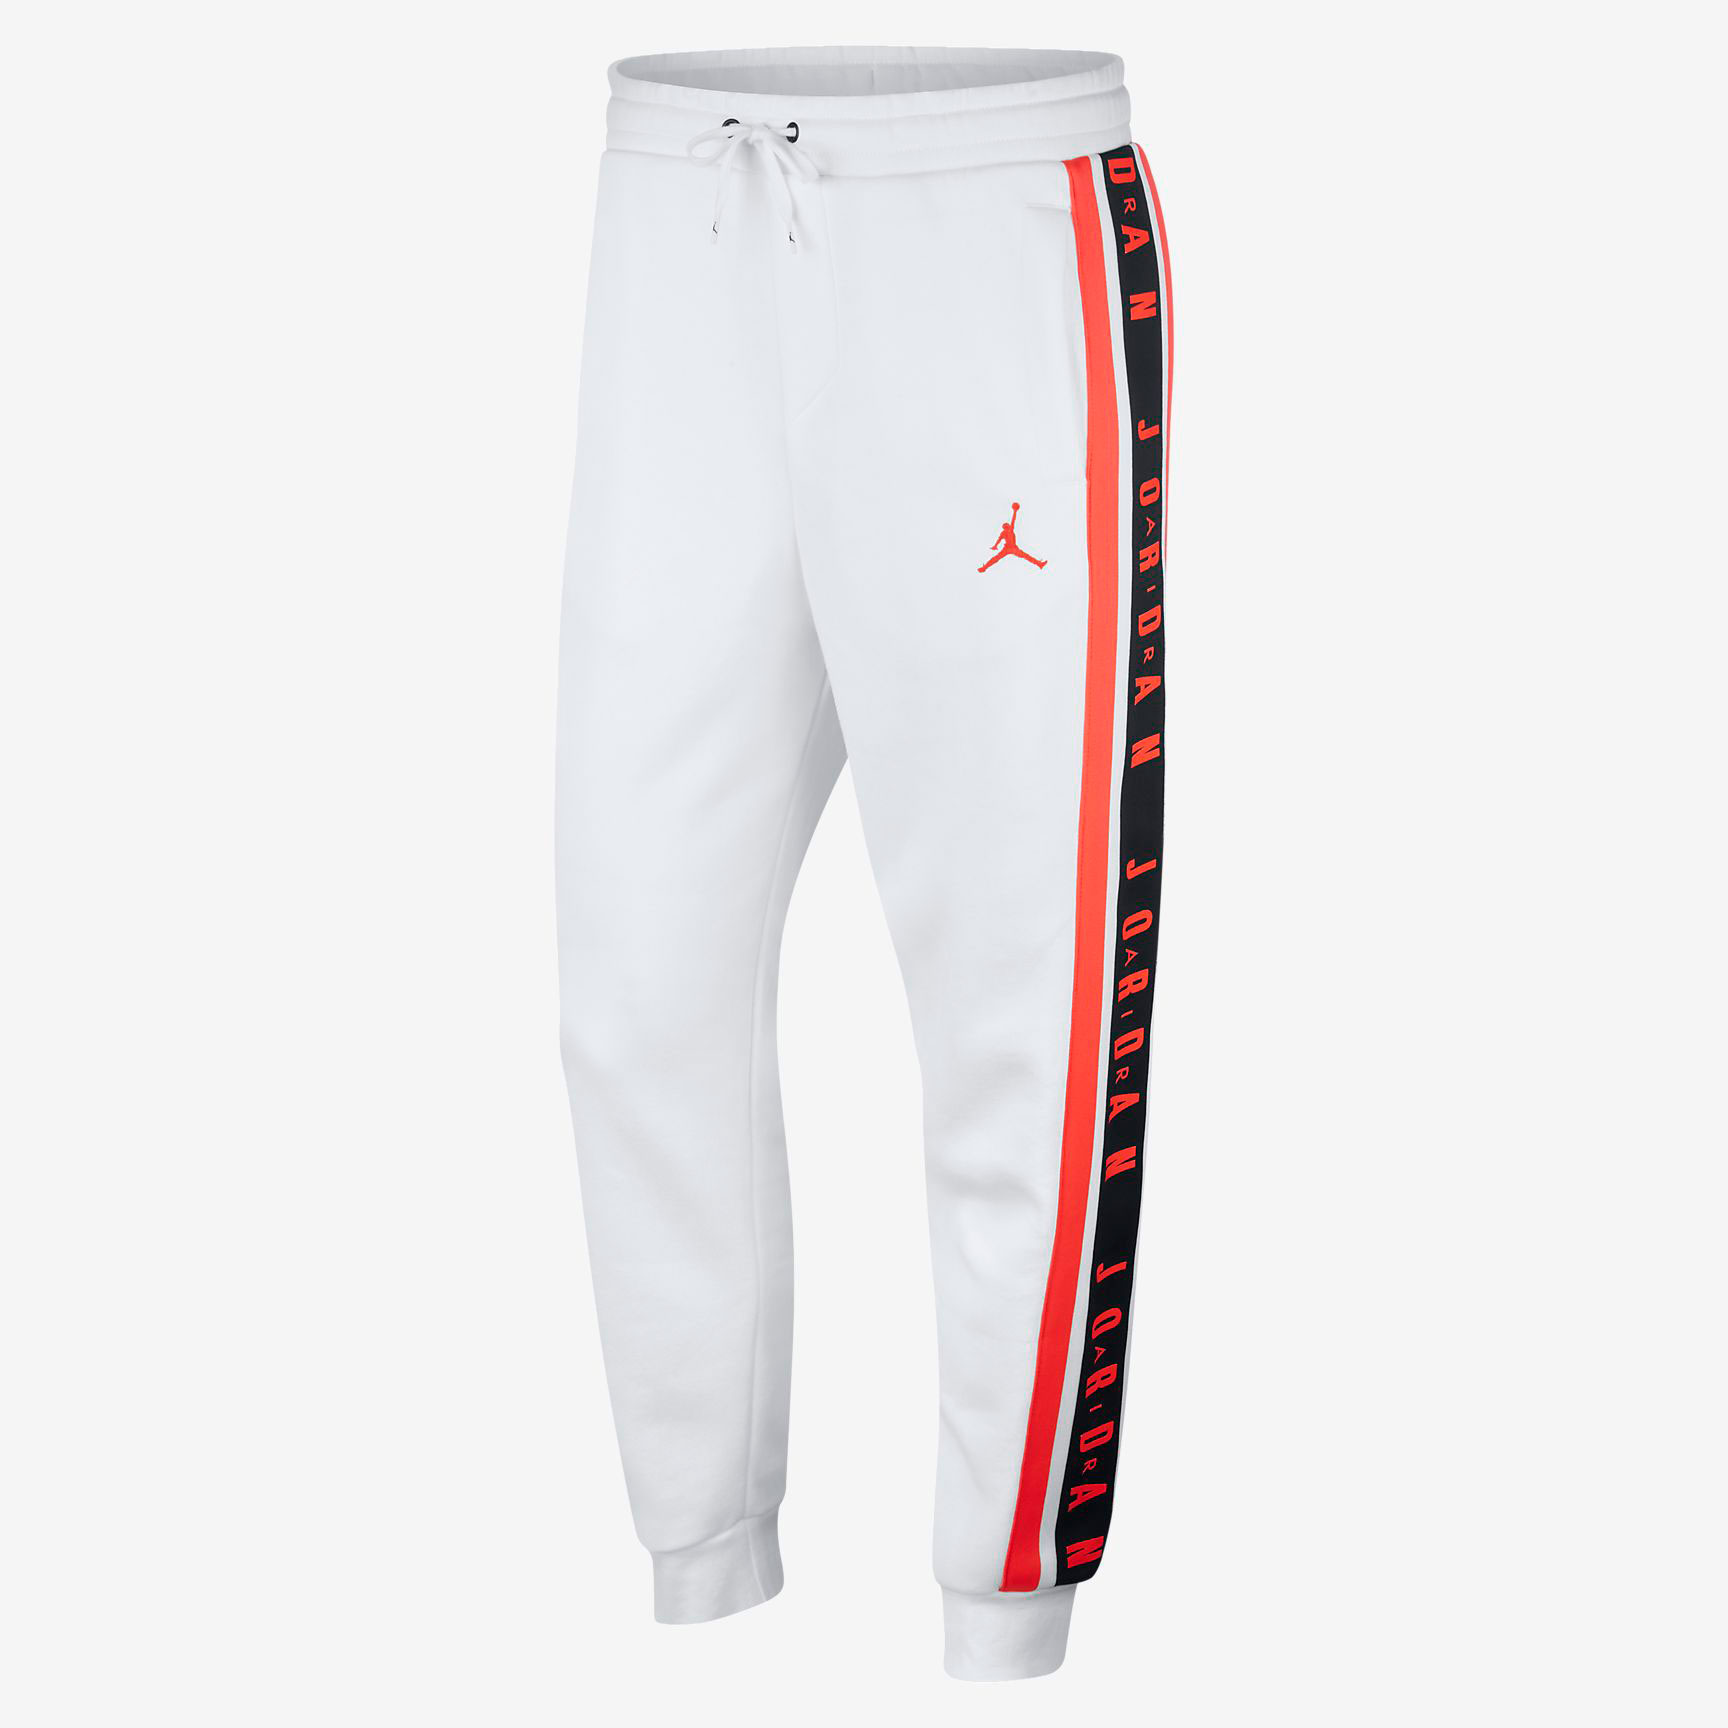 jordan-air-fleece-pants-white-infrared-1